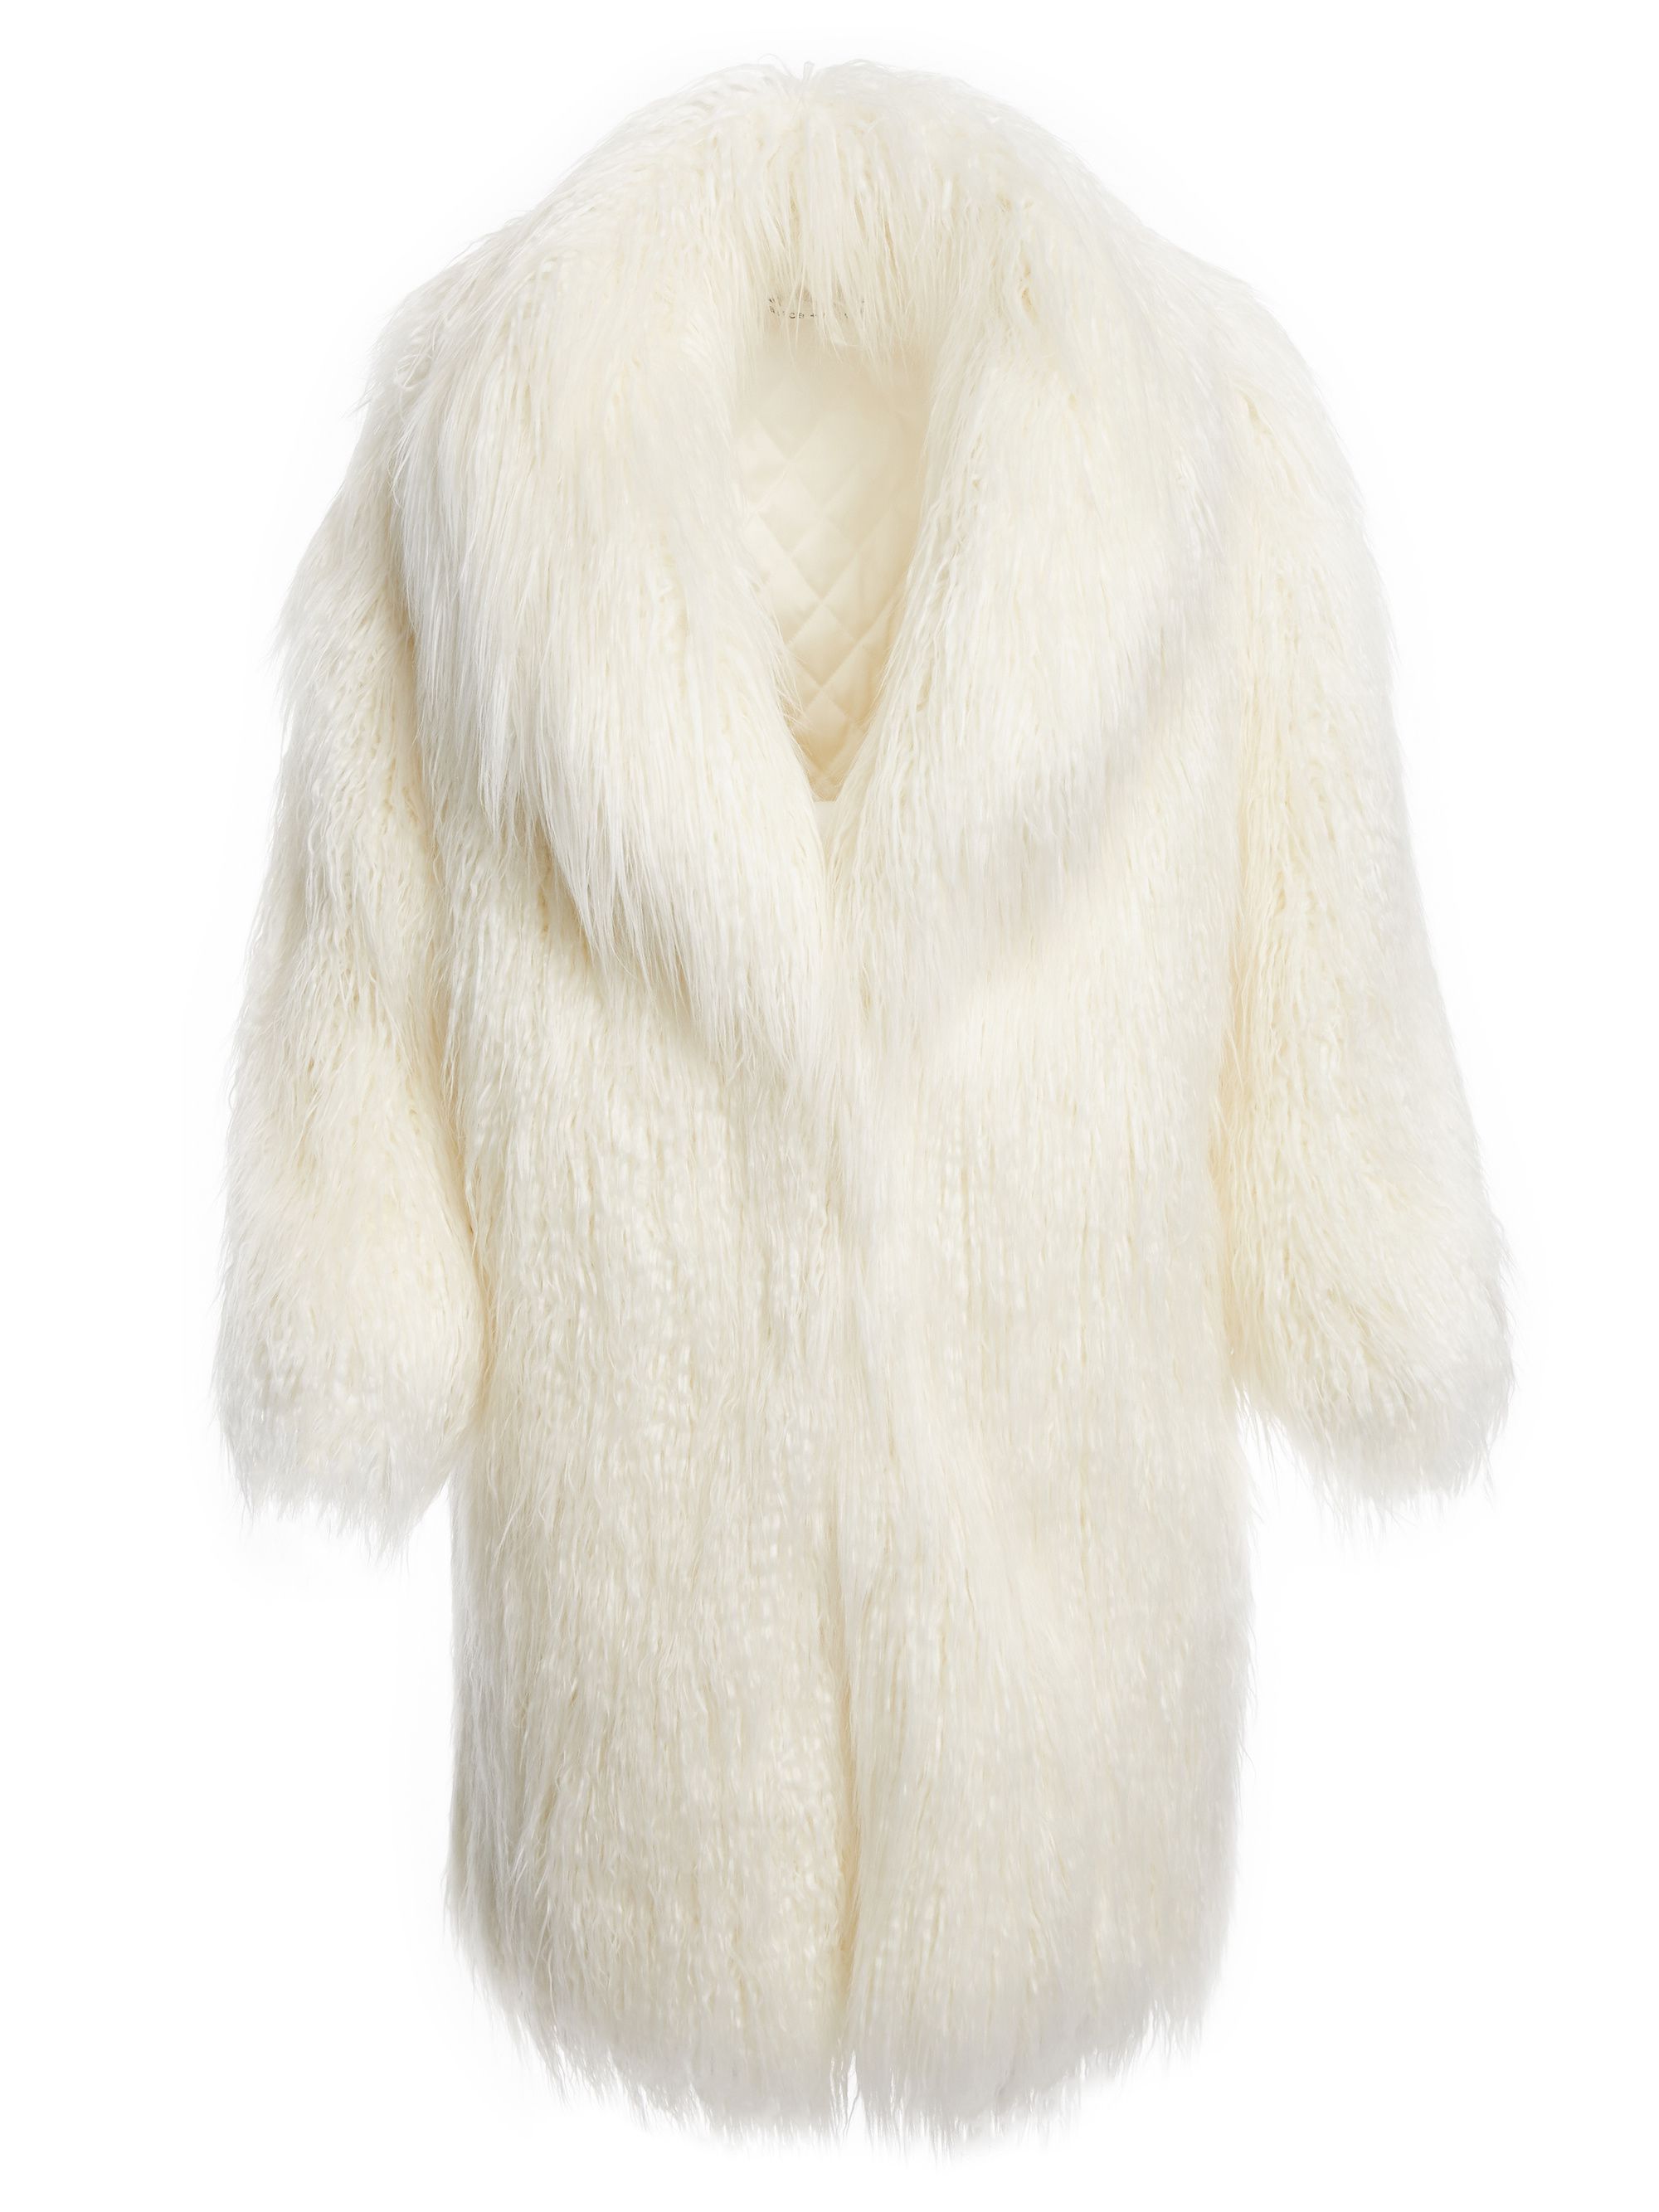 fluffy fur jacket